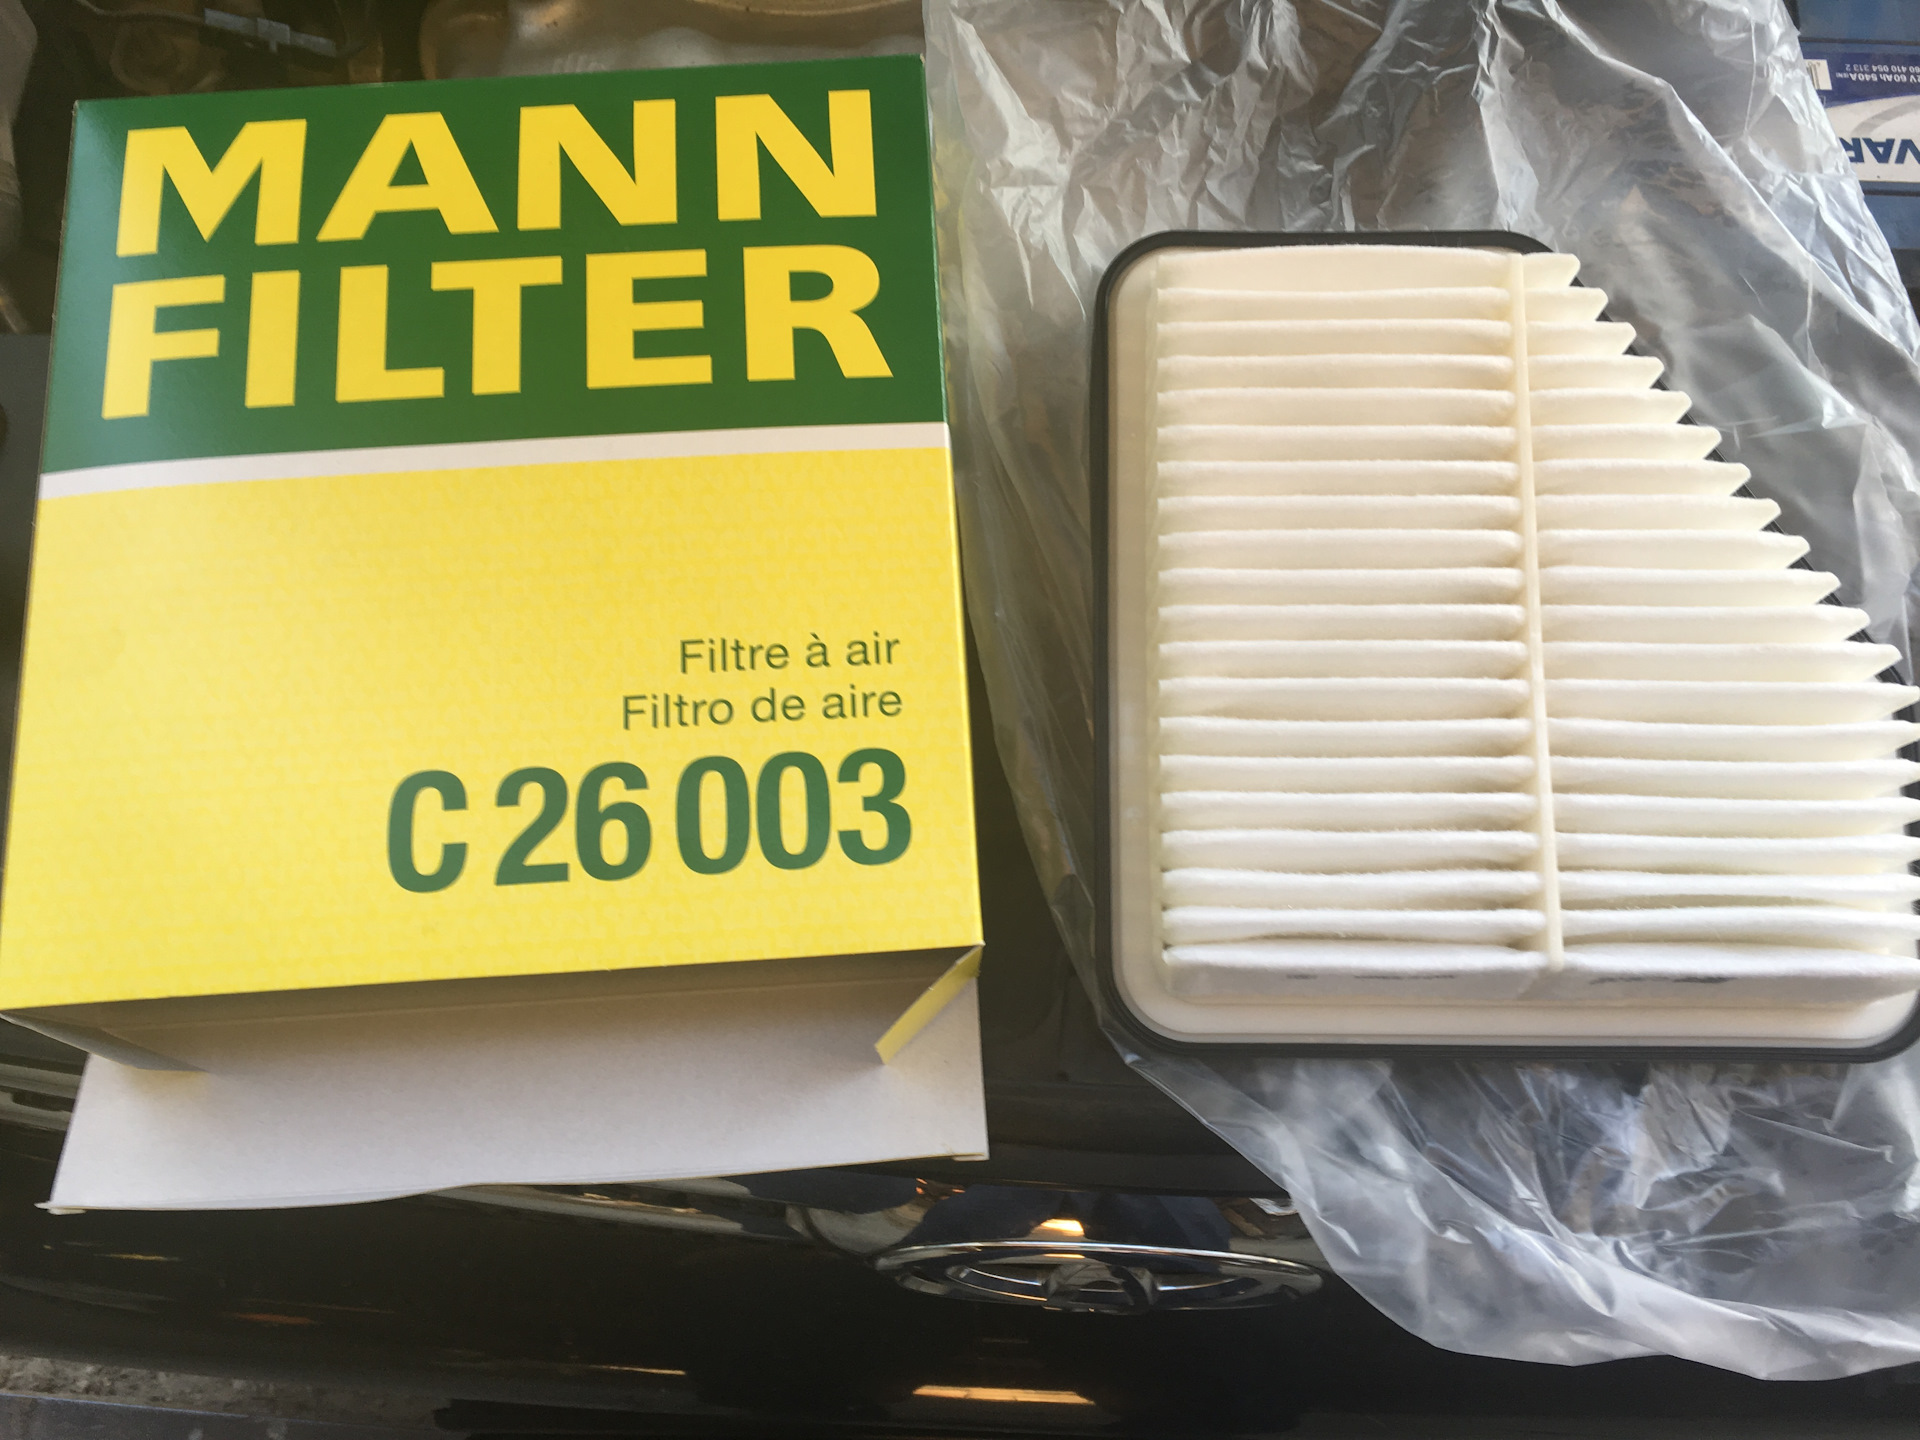 Mann Filter упаковка. Фильтр воздушный Champion 1400012. 5535005000 Фильтр воздушный. Фильтр воздушный 1000975877. Фильтр воздушный портер